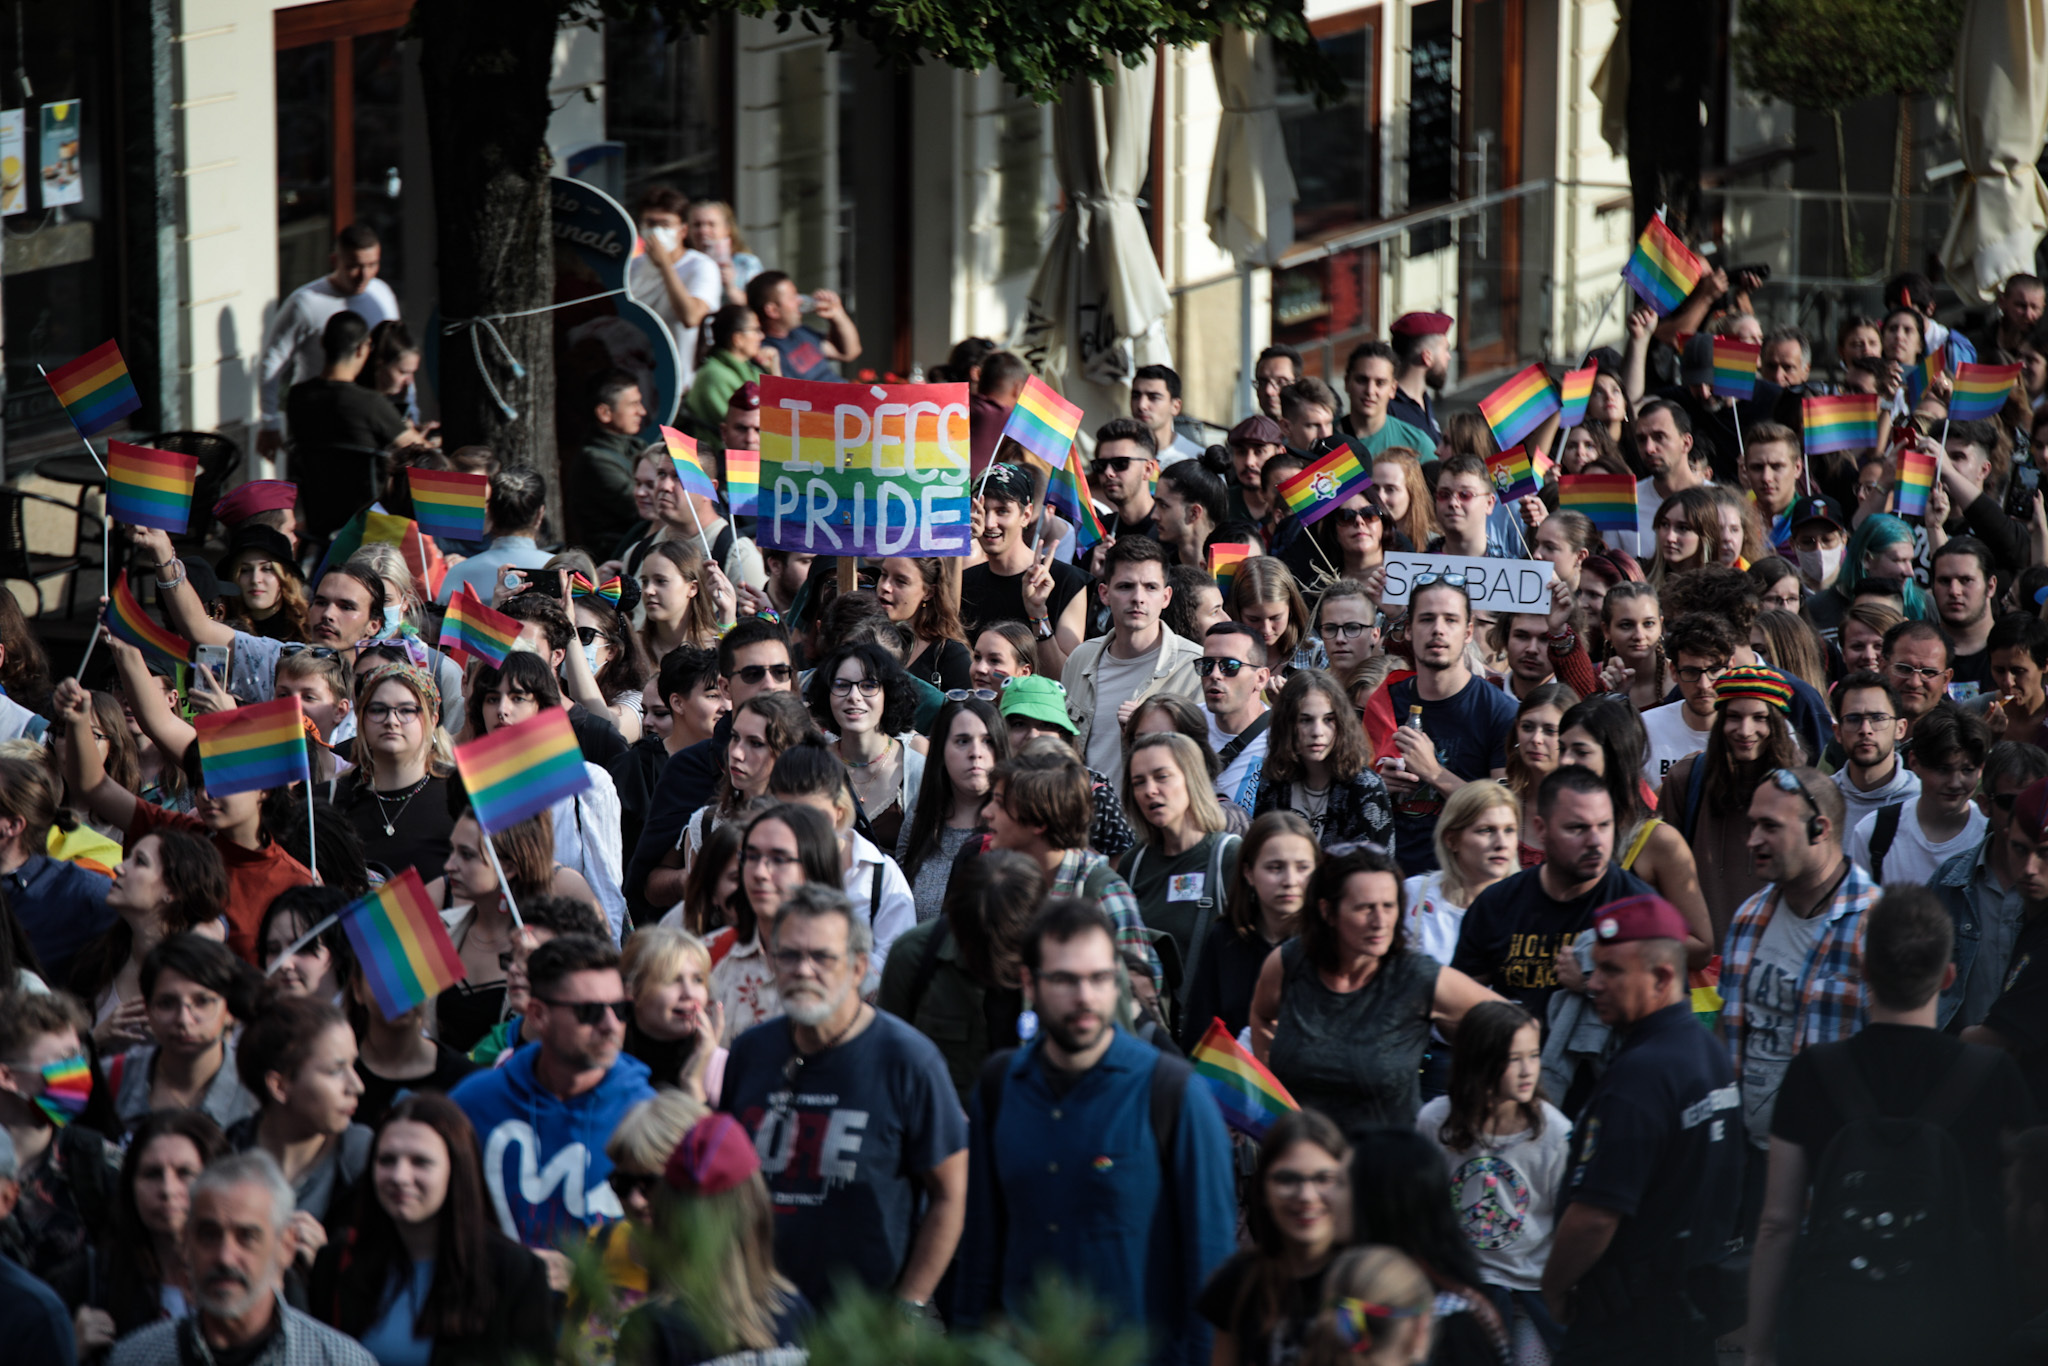 Feljelentette a Mi Hazánk politikusa a Pécsi Pride-ot